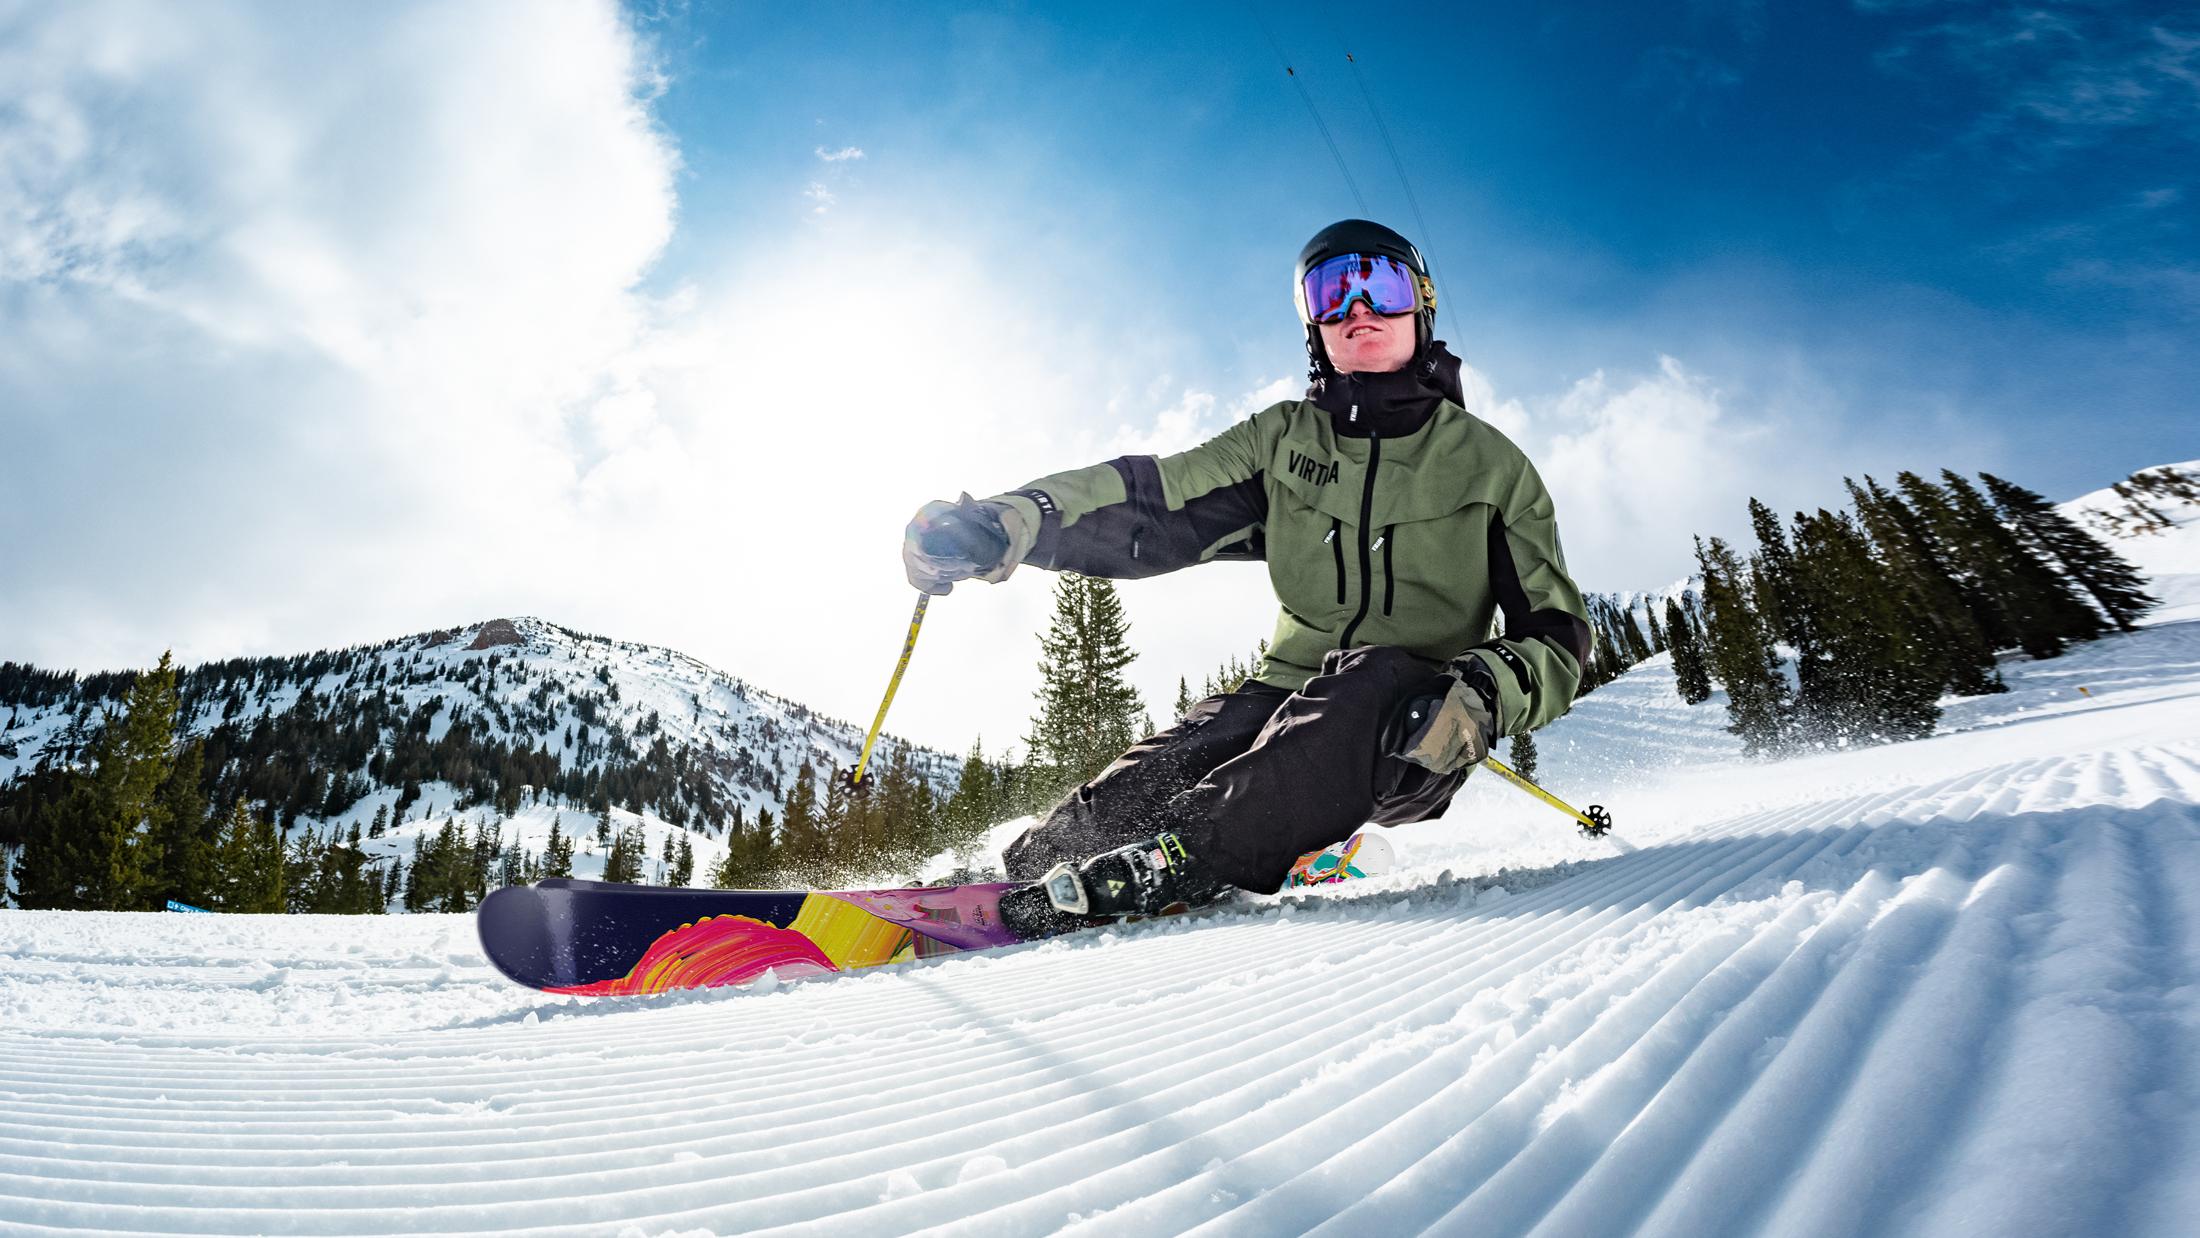 The Fastforward "VISCERAL" Alex Voinea x J Collab Limited Edition Ski Shredding Image